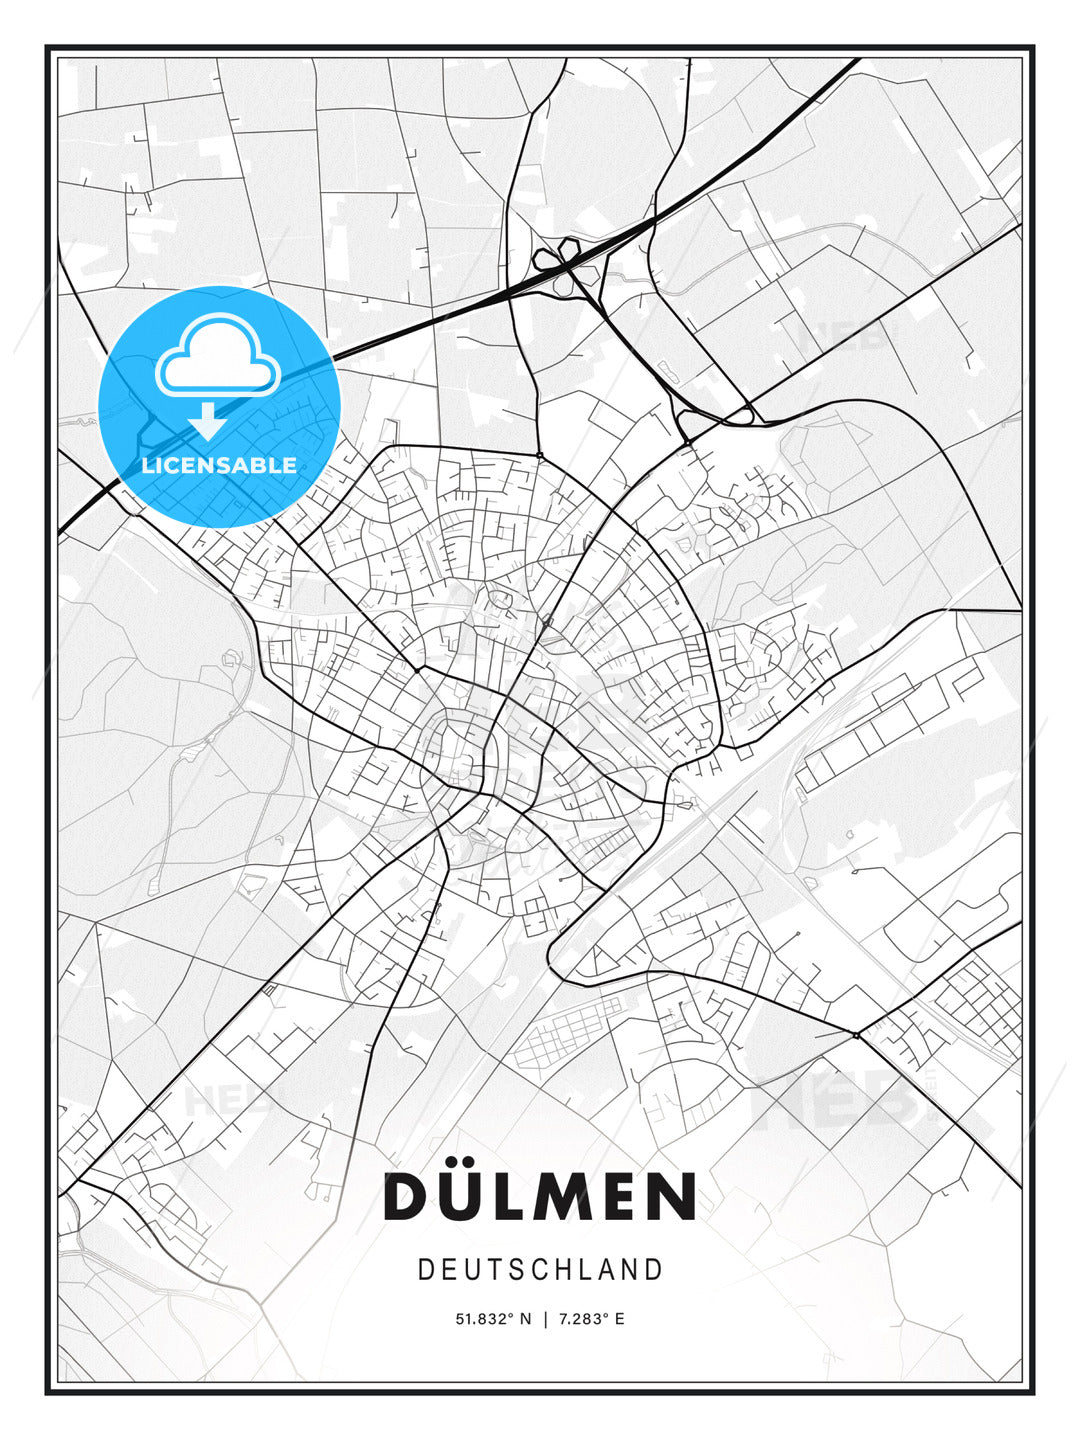 DÜLMEN / Dulmen, Germany, Modern Print Template in Various Formats - HEBSTREITS Sketches